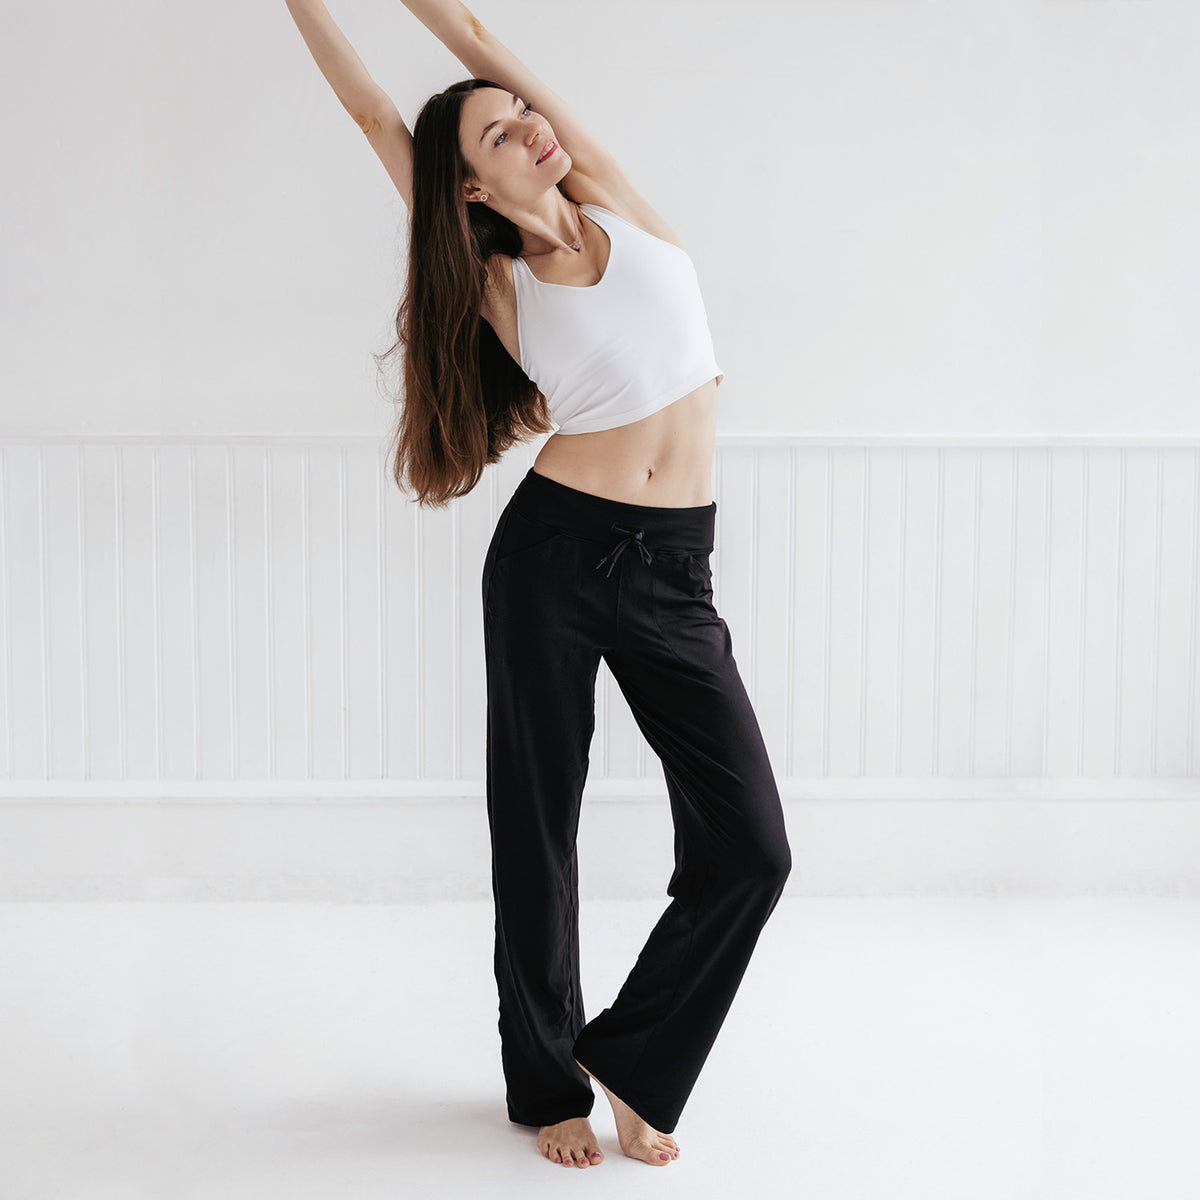 Yoga Pants For Petite Sizes  International Society of Precision